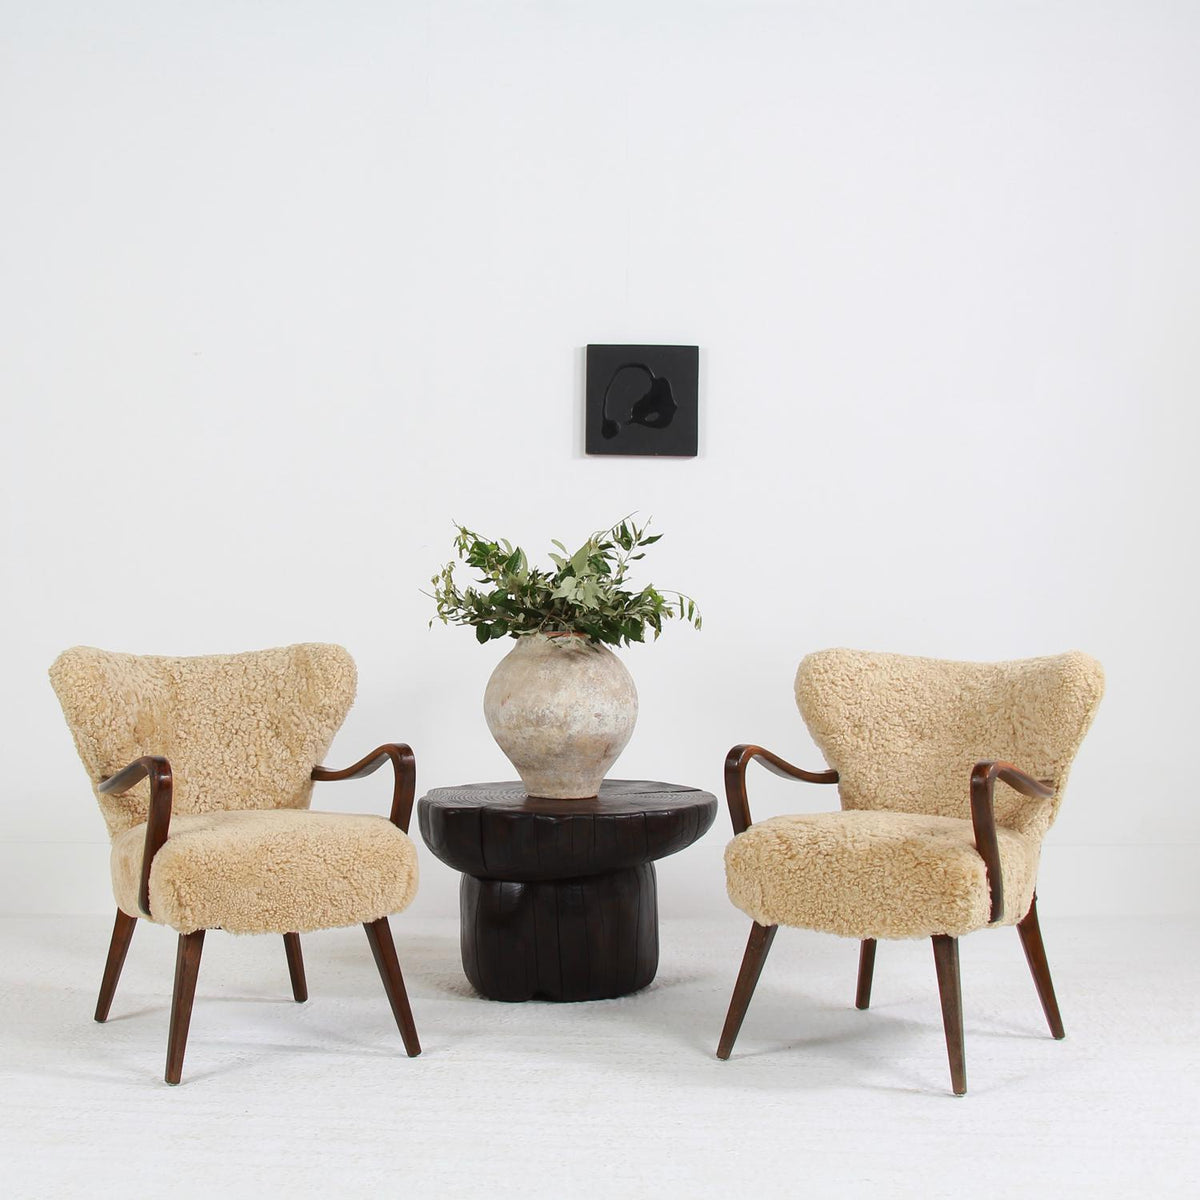 Wonderful Pair of Danish  Modern Lounge Chairs in Honey Coloured Sheepskin